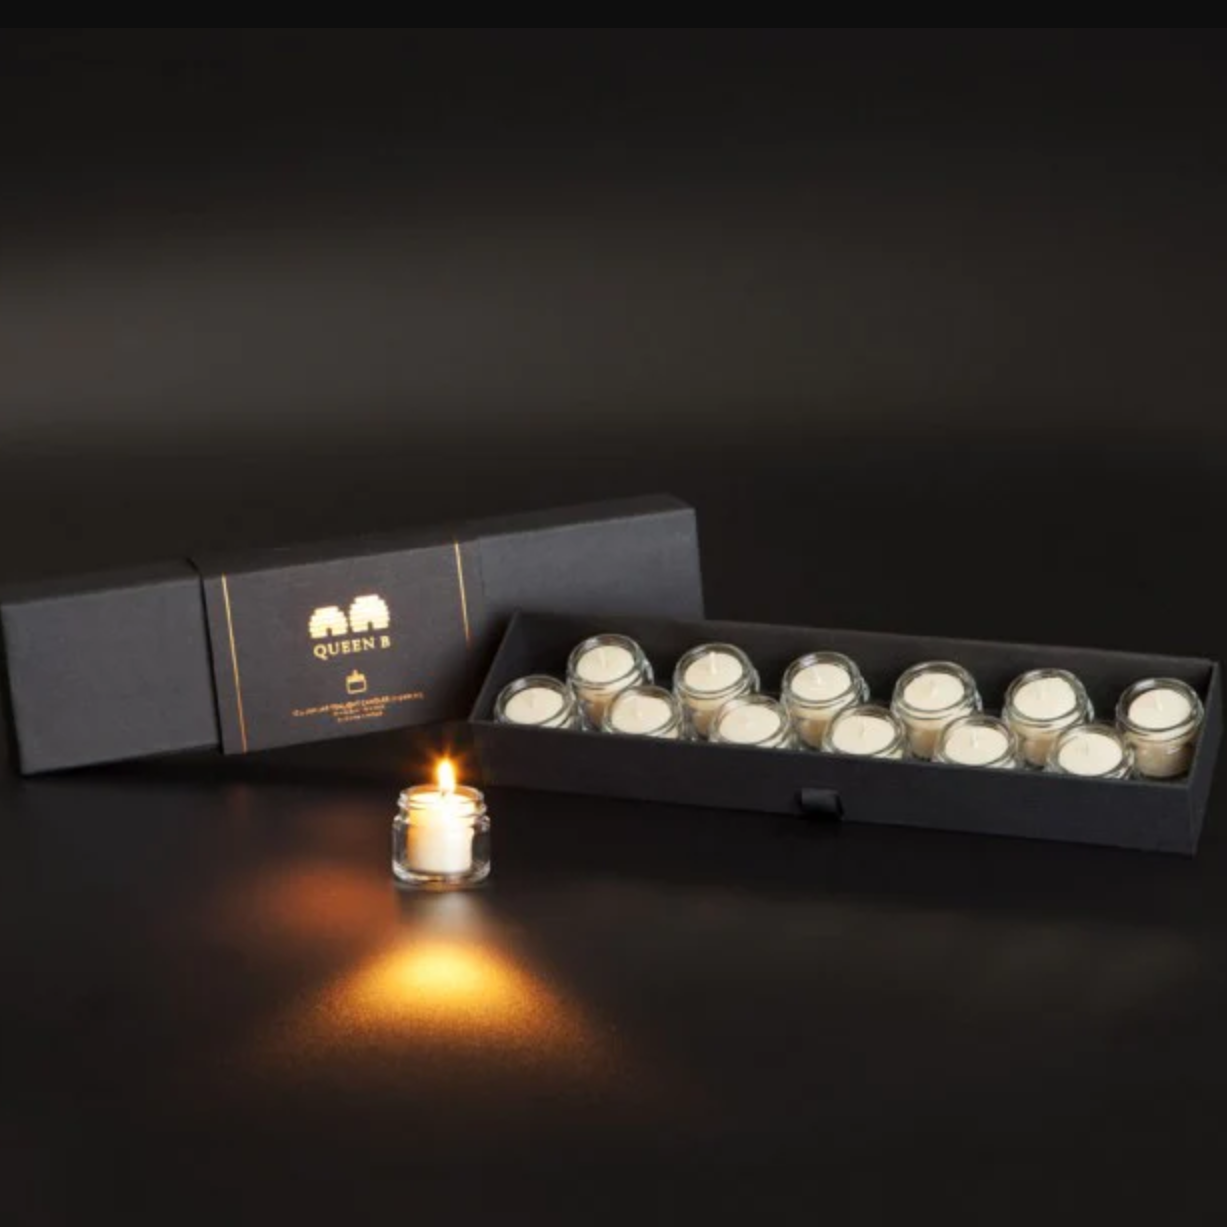 Queen B - Black Label Jam Jar Tealight Candles Gift Set